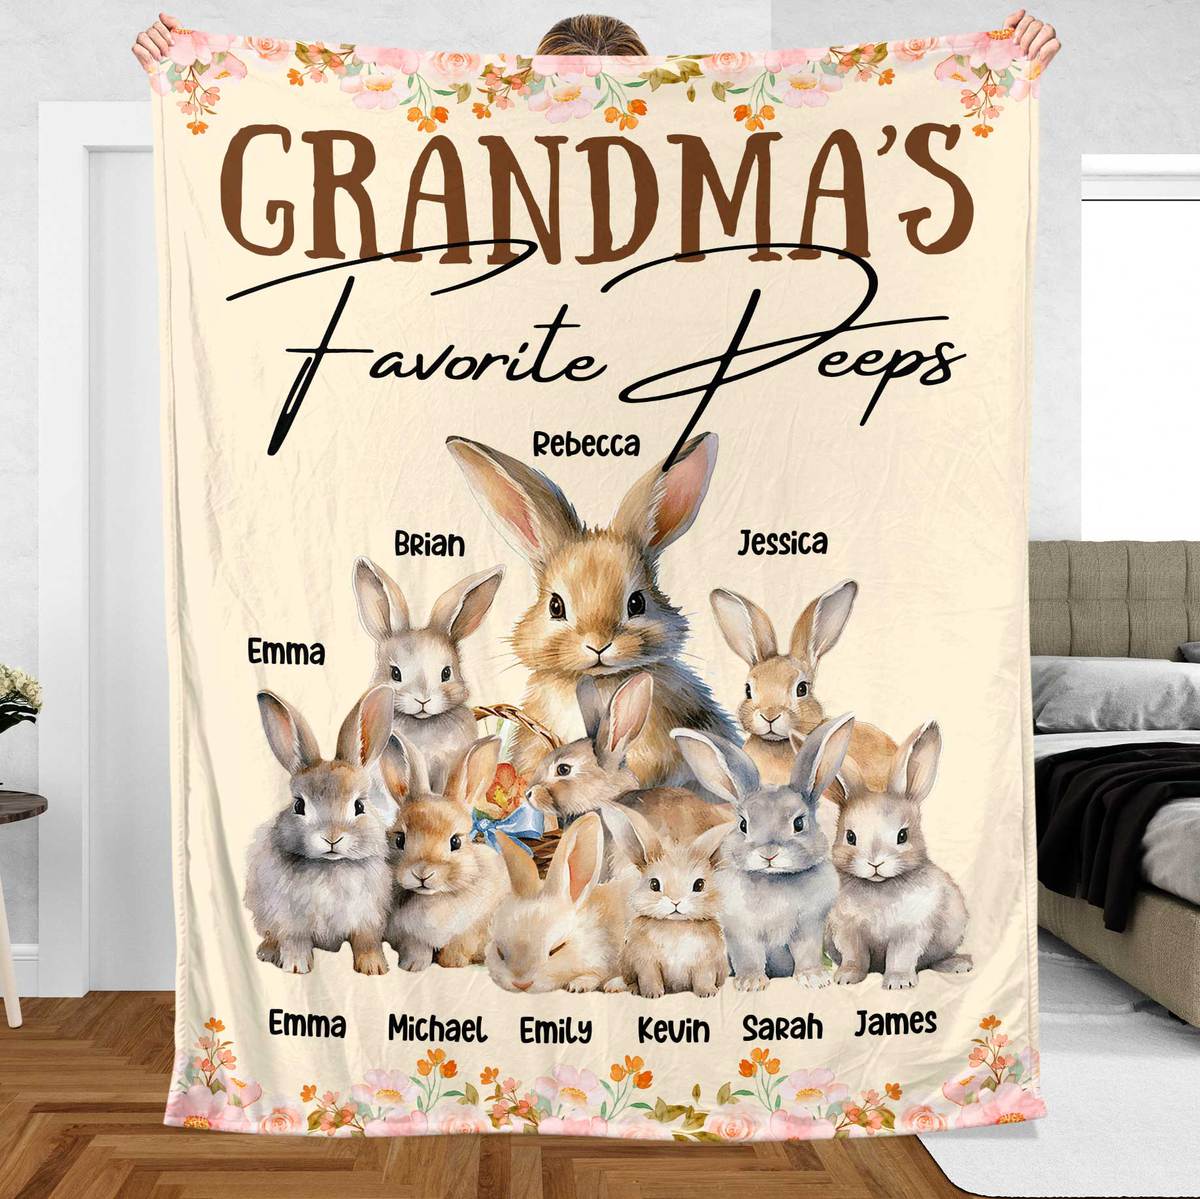 Grandma's Favorite Deeps Rabbit - Personalized Blanket - Best Gift For Mother, For Grandma - Giftago